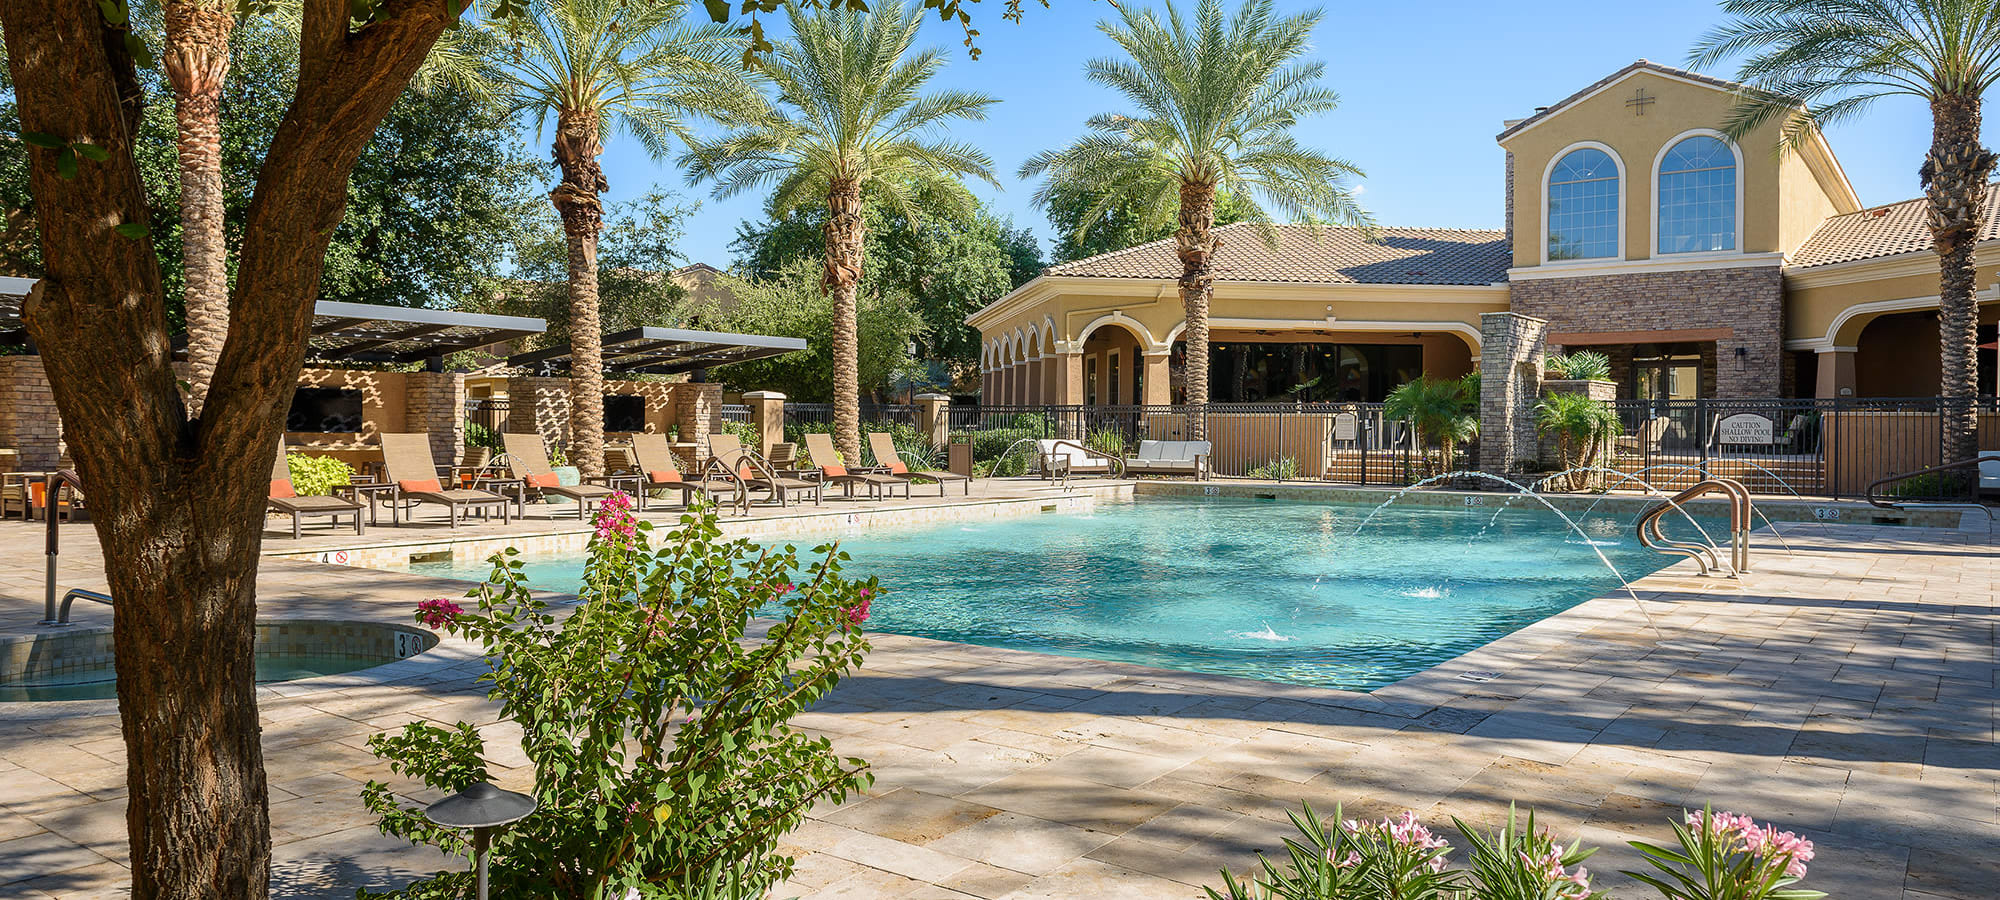 Luxurious pool at Stone Oaks in Chandler, Arizona